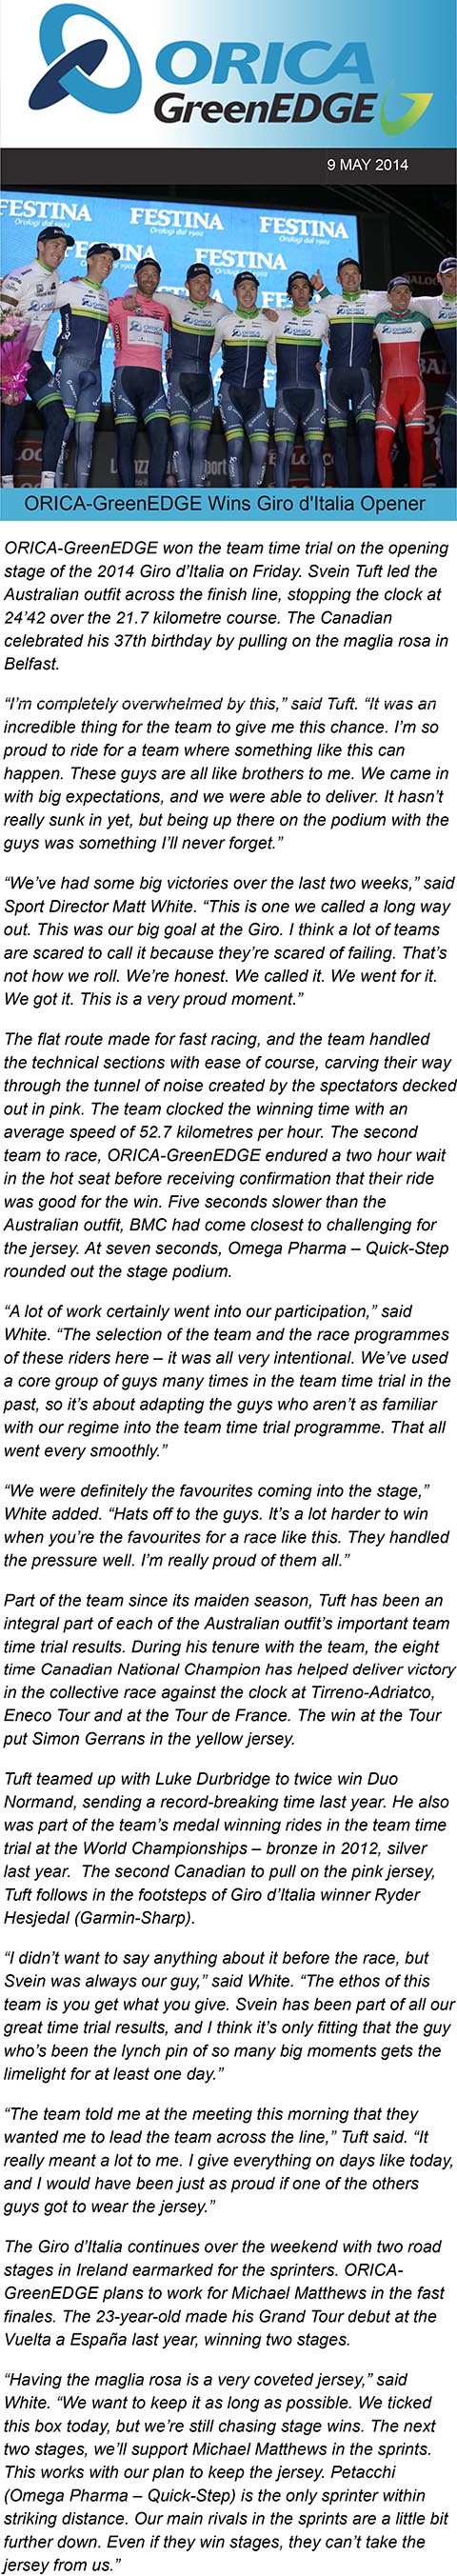 ORICAGreenEDGE Wins Giro dItalia Opener